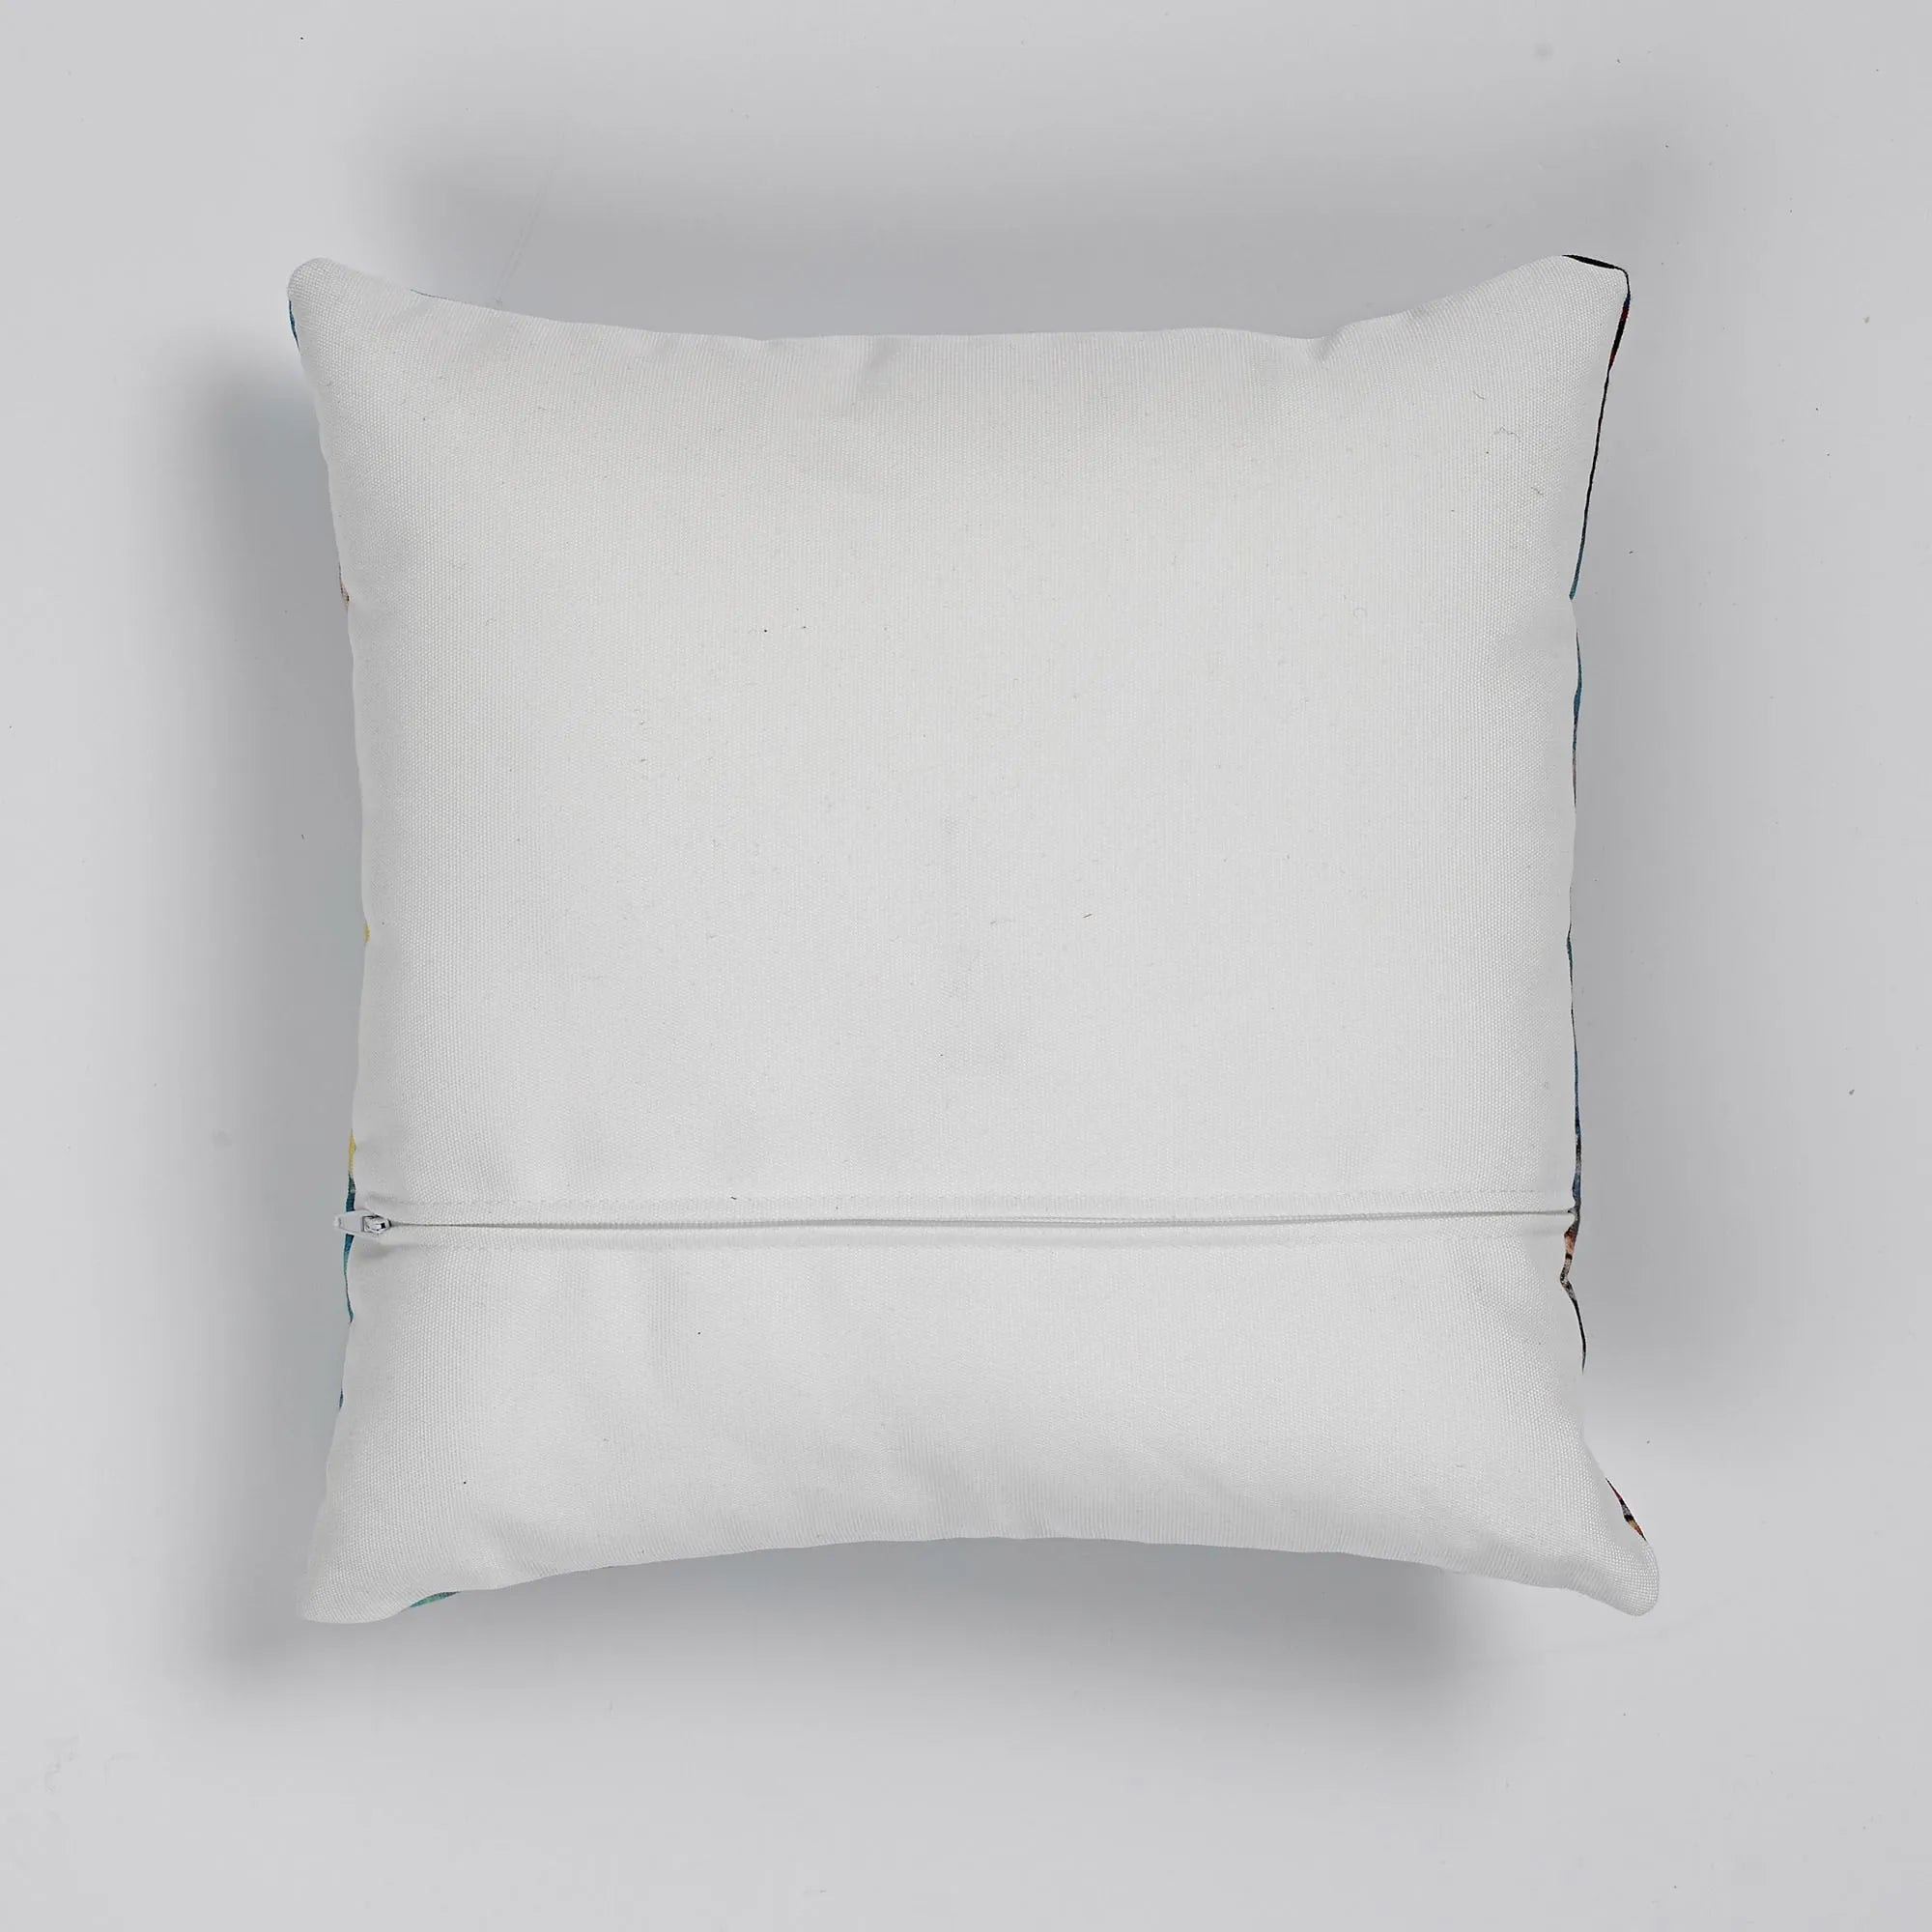 Sagittaire - Maurice Pillard Verneuil Cushion - Decorative Throw Pillow - Throw Pillows - Aesthetic Art